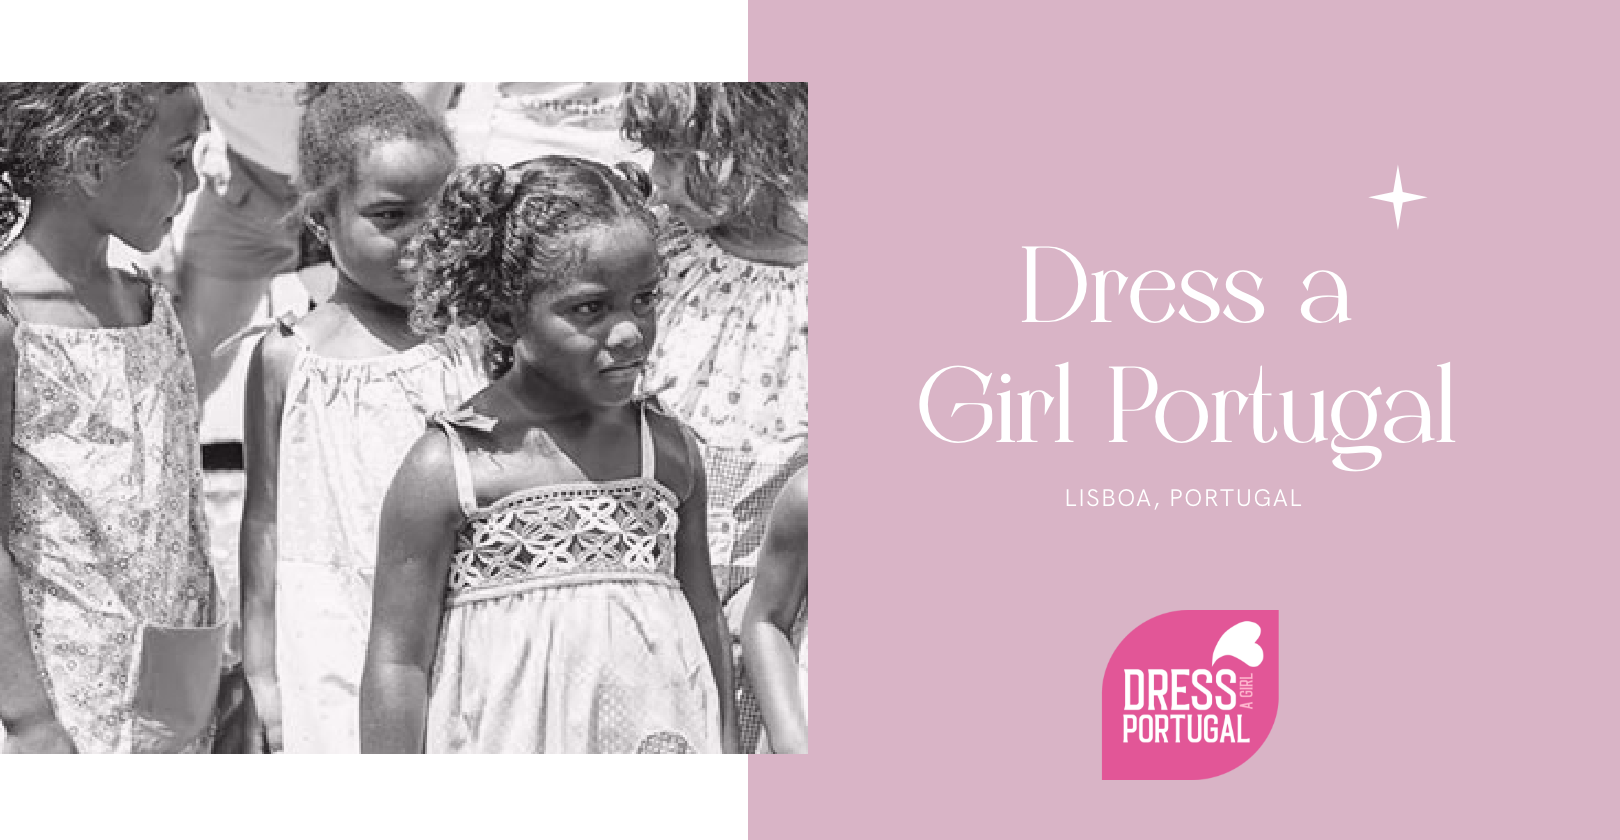 Dress a girl Portugal